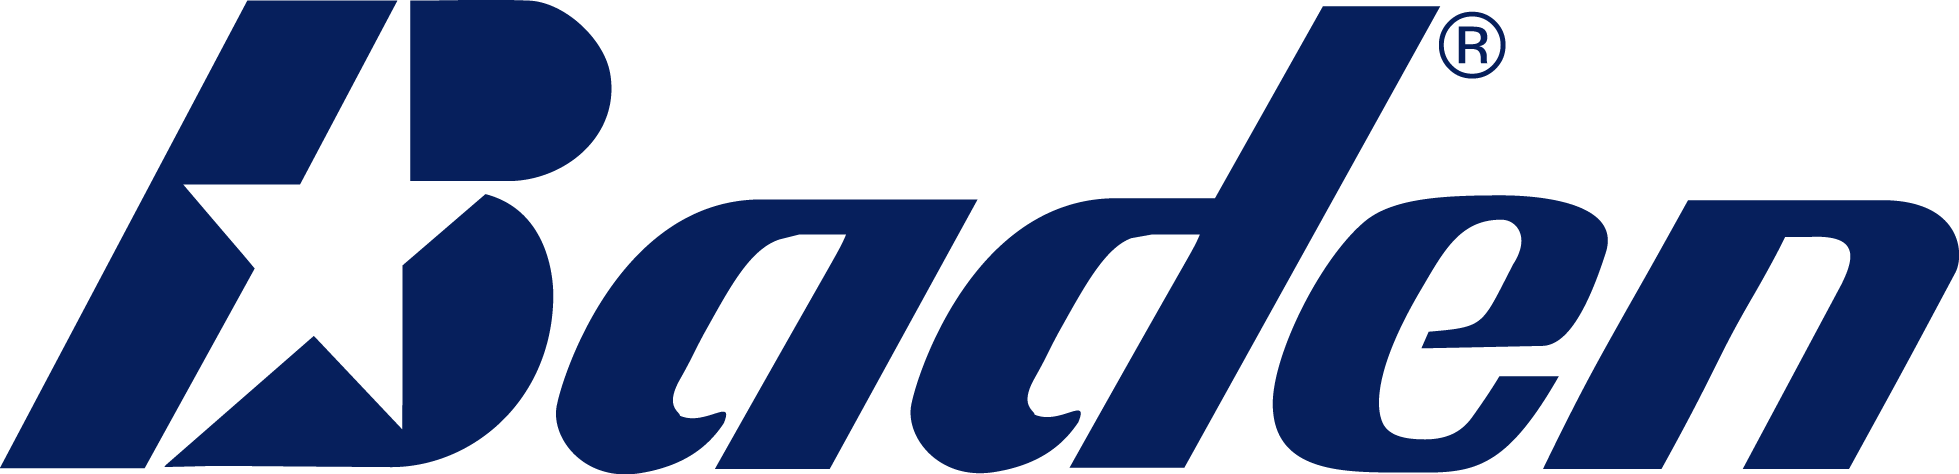 Baden Sports Brand Logo PNG